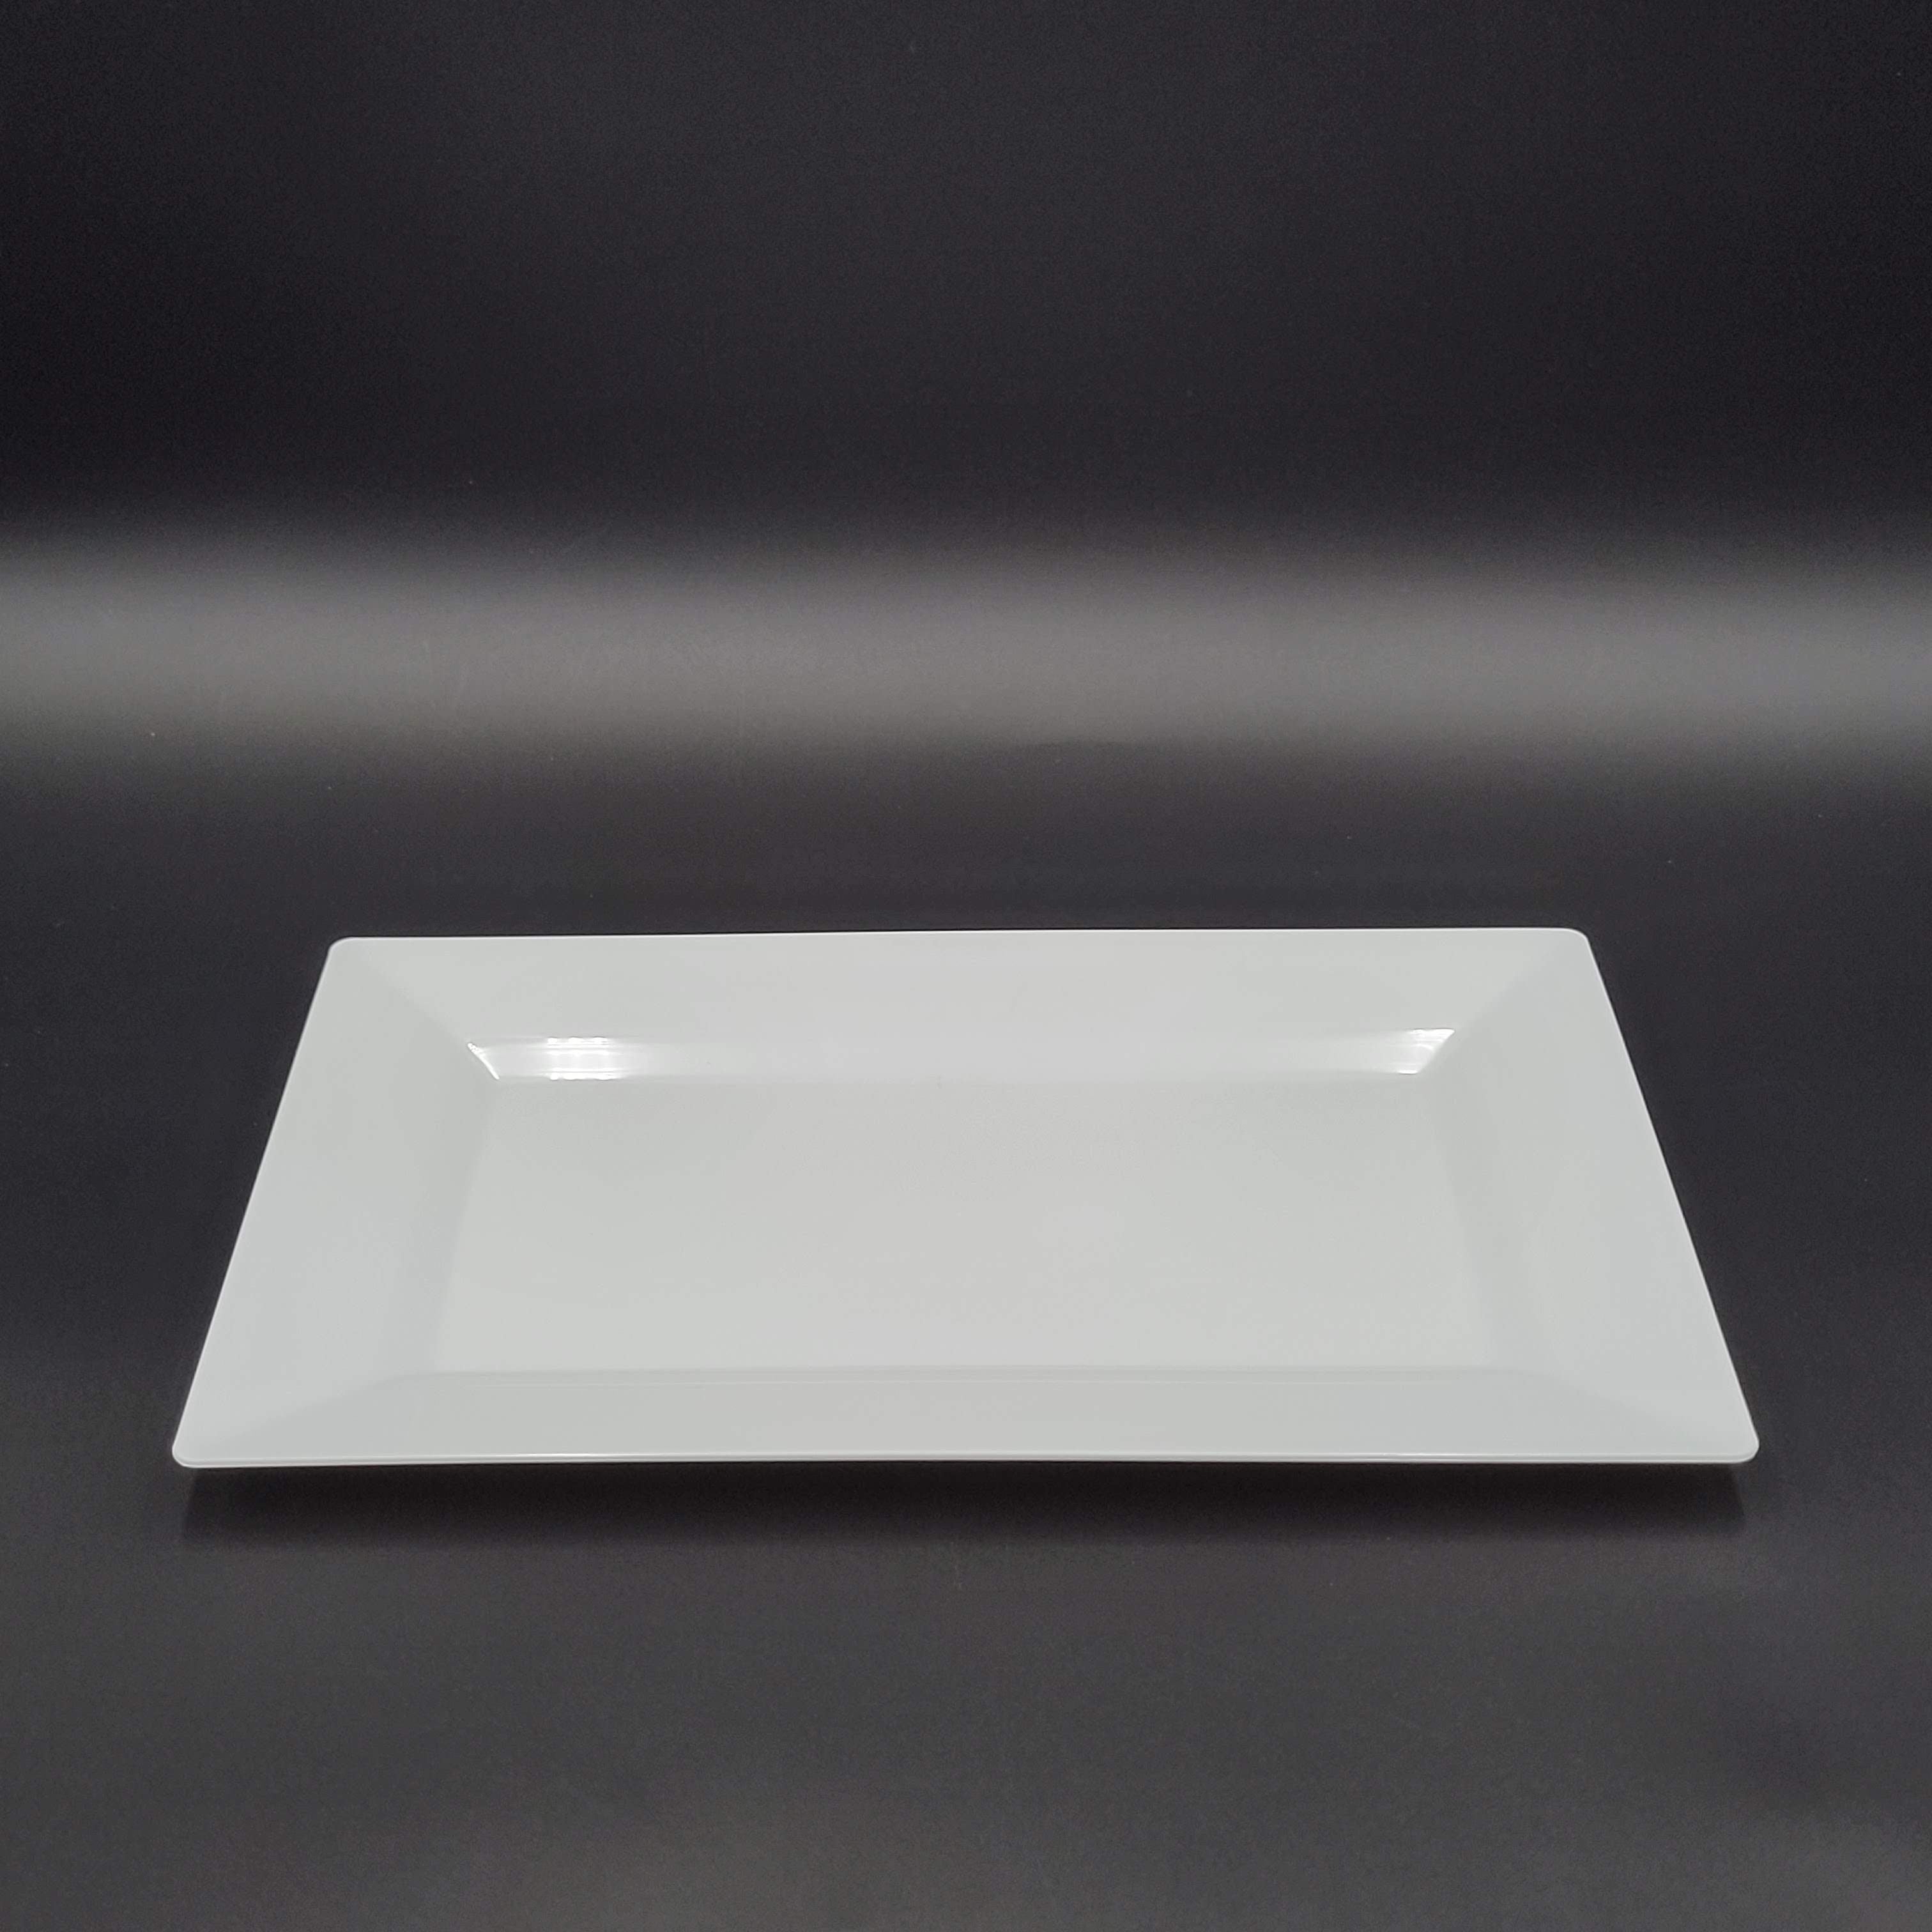 EMI Yoshi Plastic Rectangular Dinner Plate White 13.5" x 8.5" EMI-RP11W - 120/Case